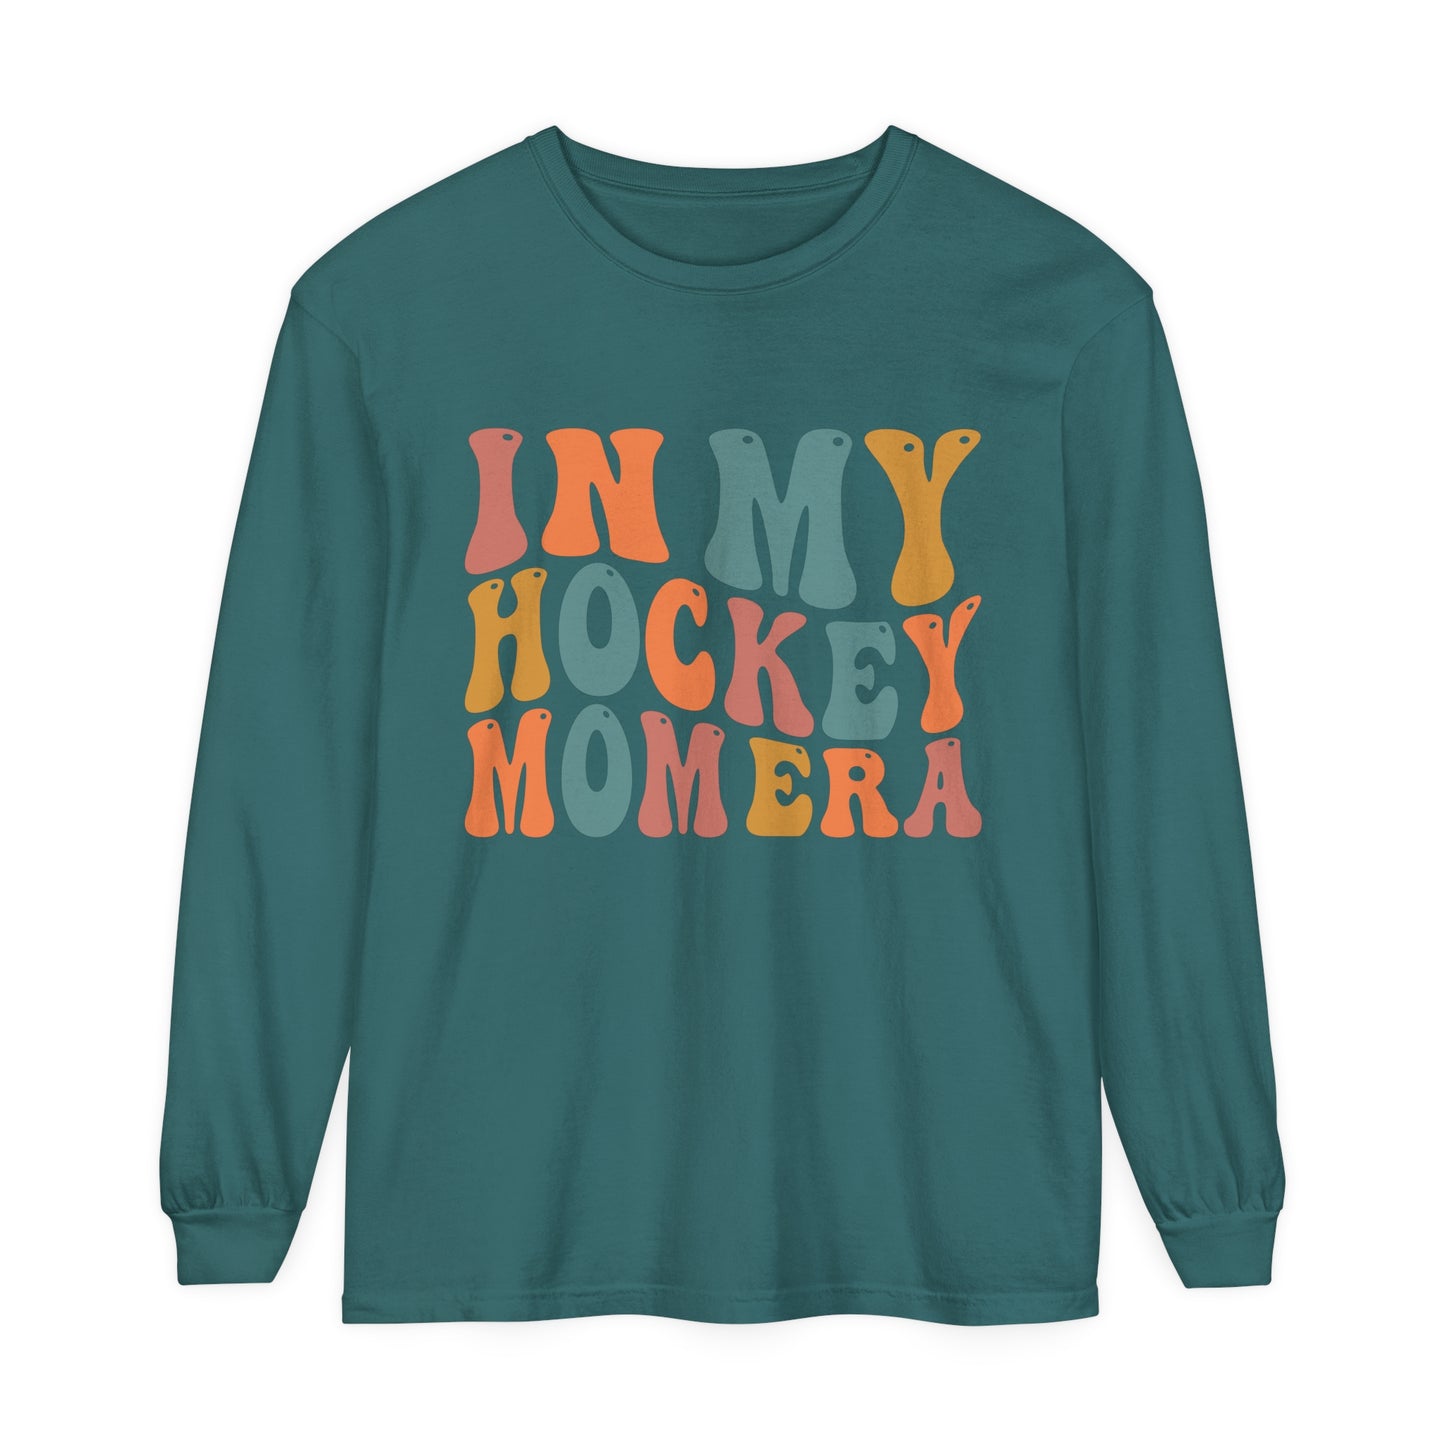 In my hockey mom era loose long sleeve women's  T-Shirt